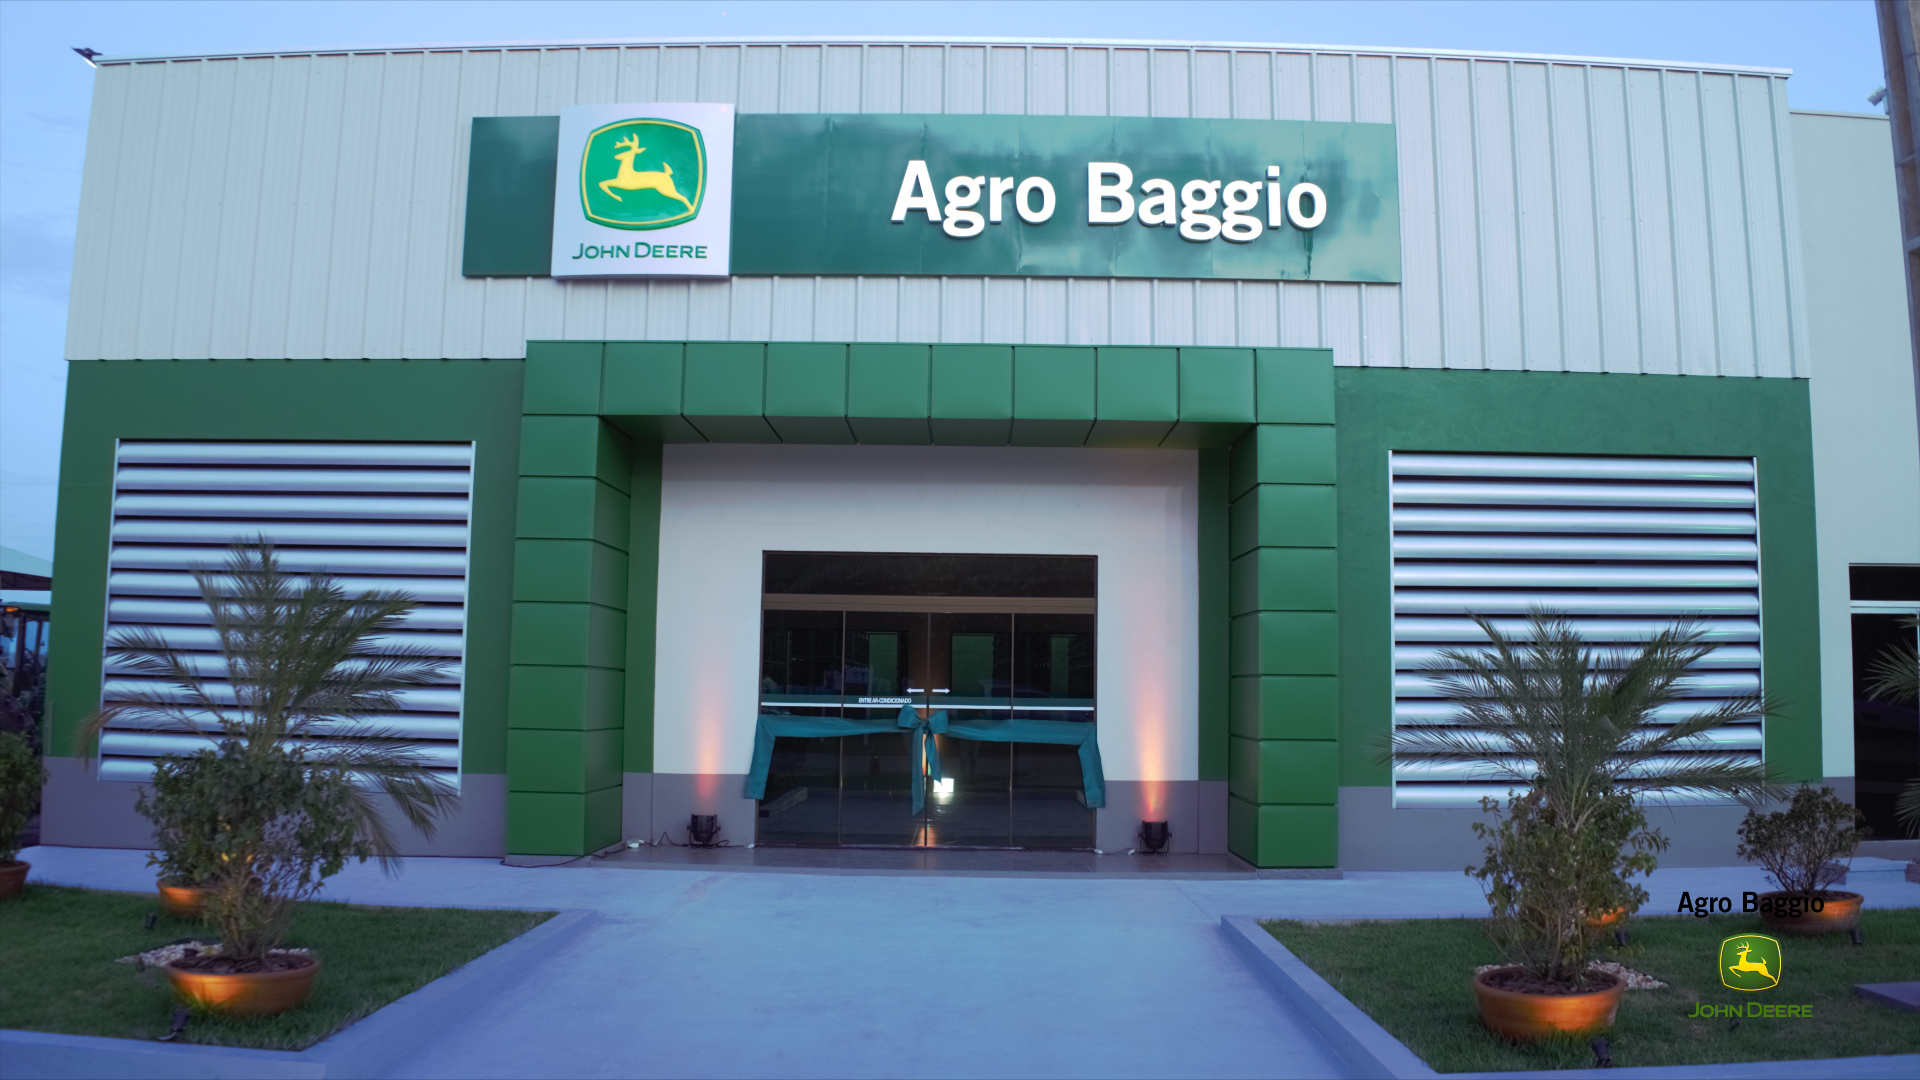 Agro Baggio inaugura concessionária John Deere em Feliz Natal | Agro Baggio